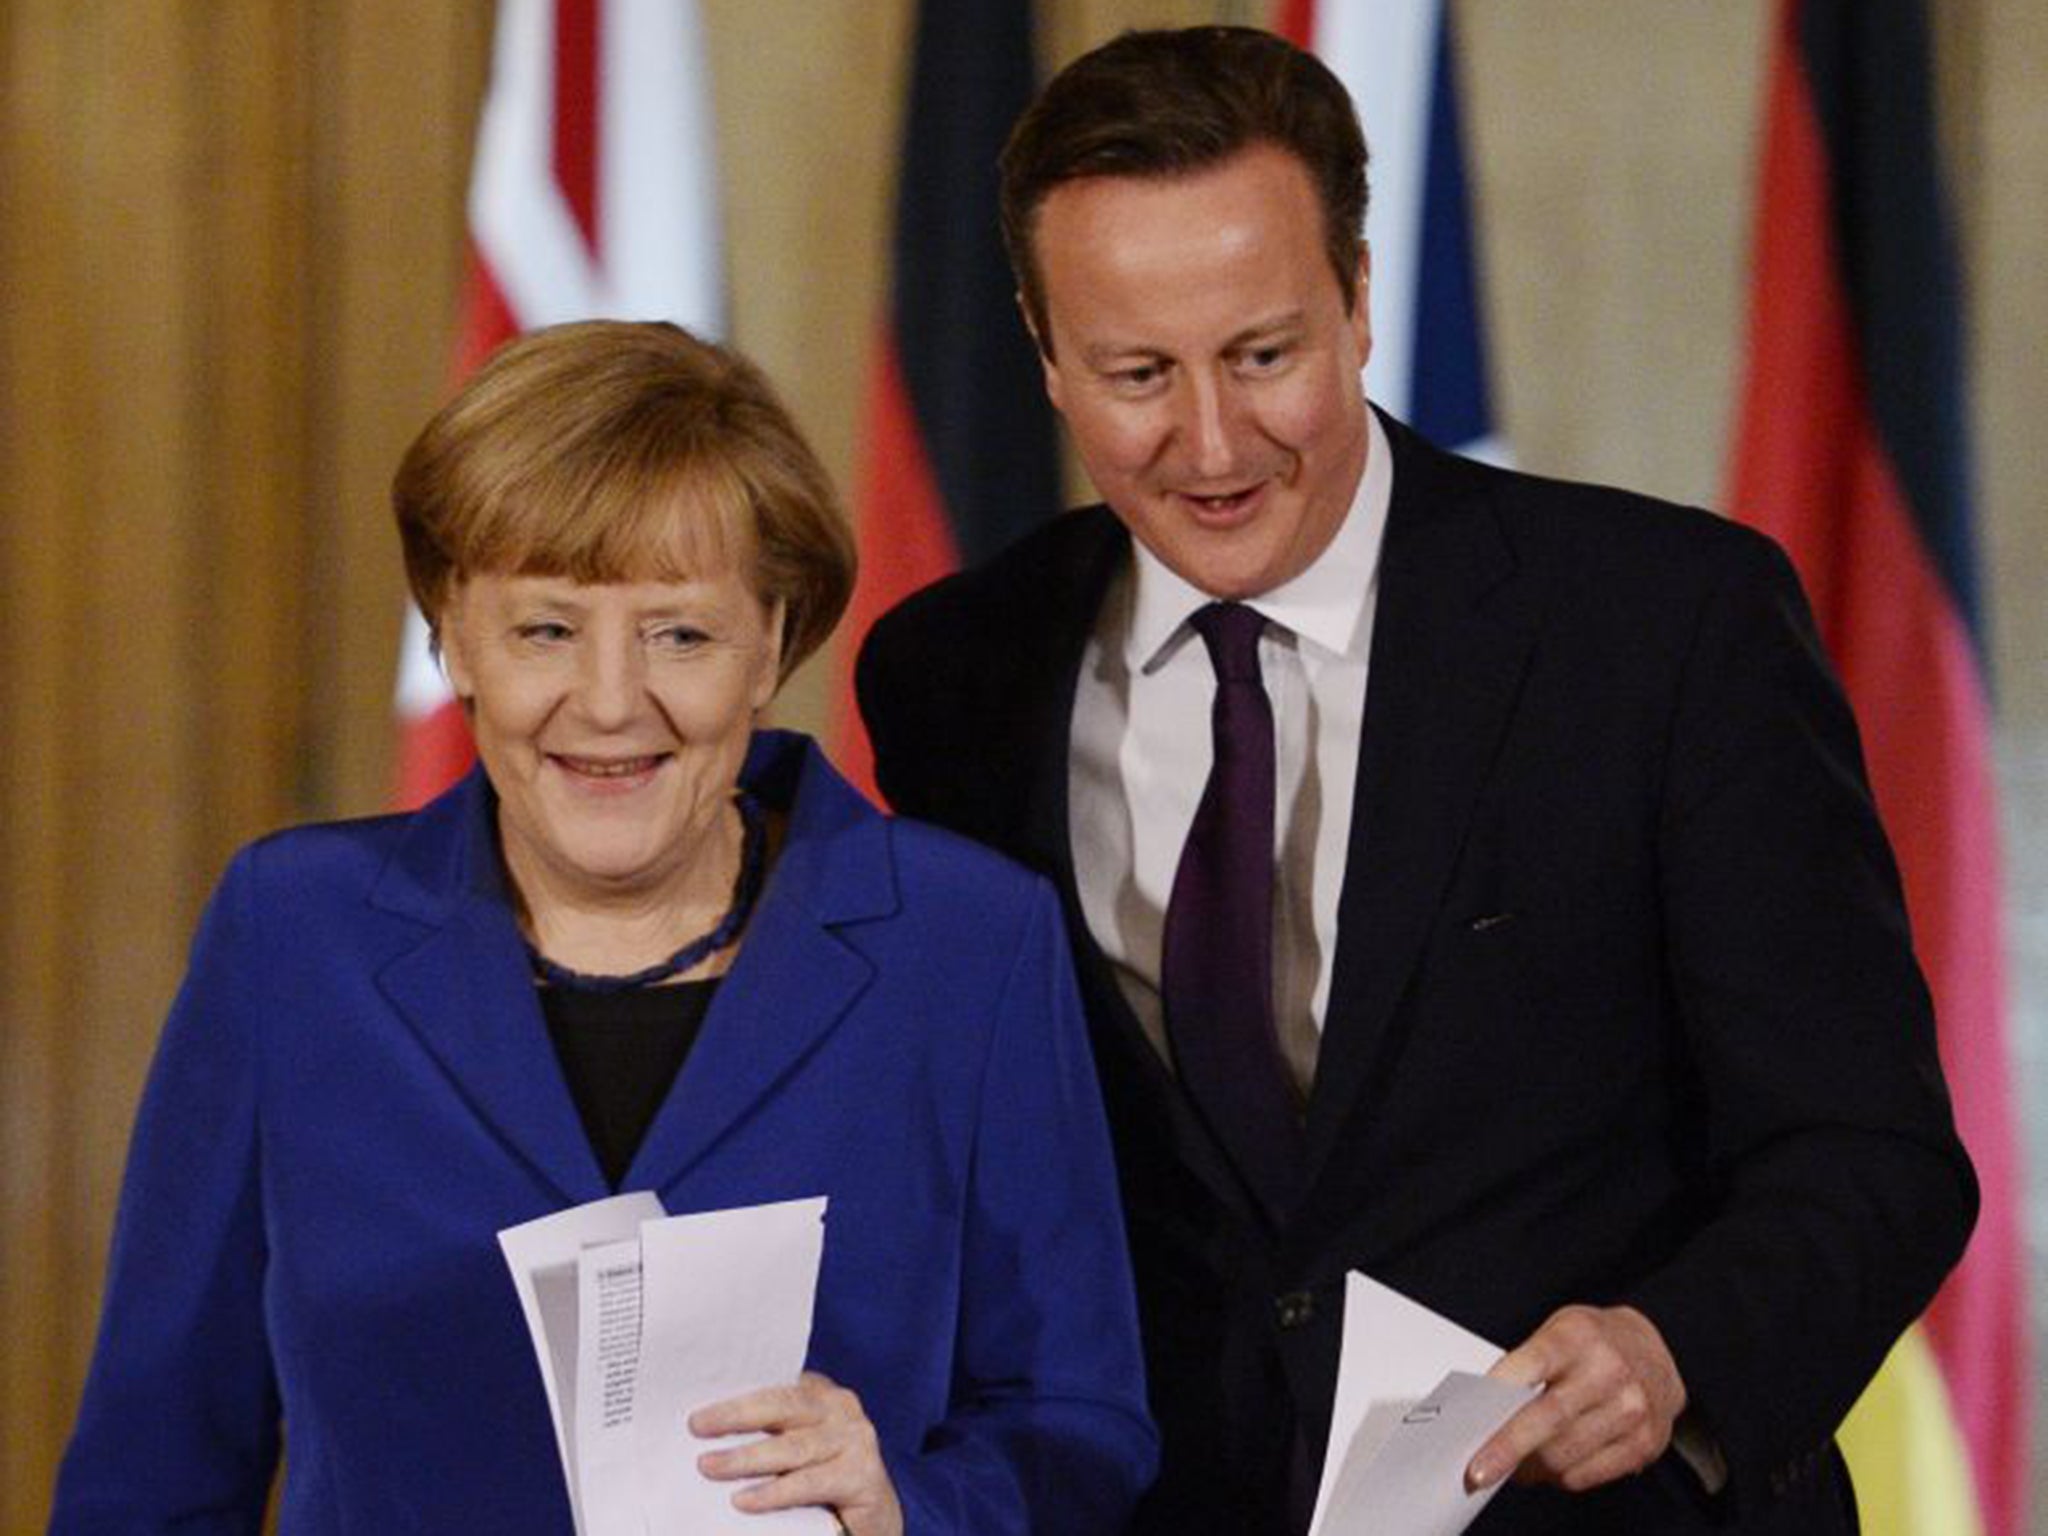 It is understood that David Cameron has Angela Merkel’s backing